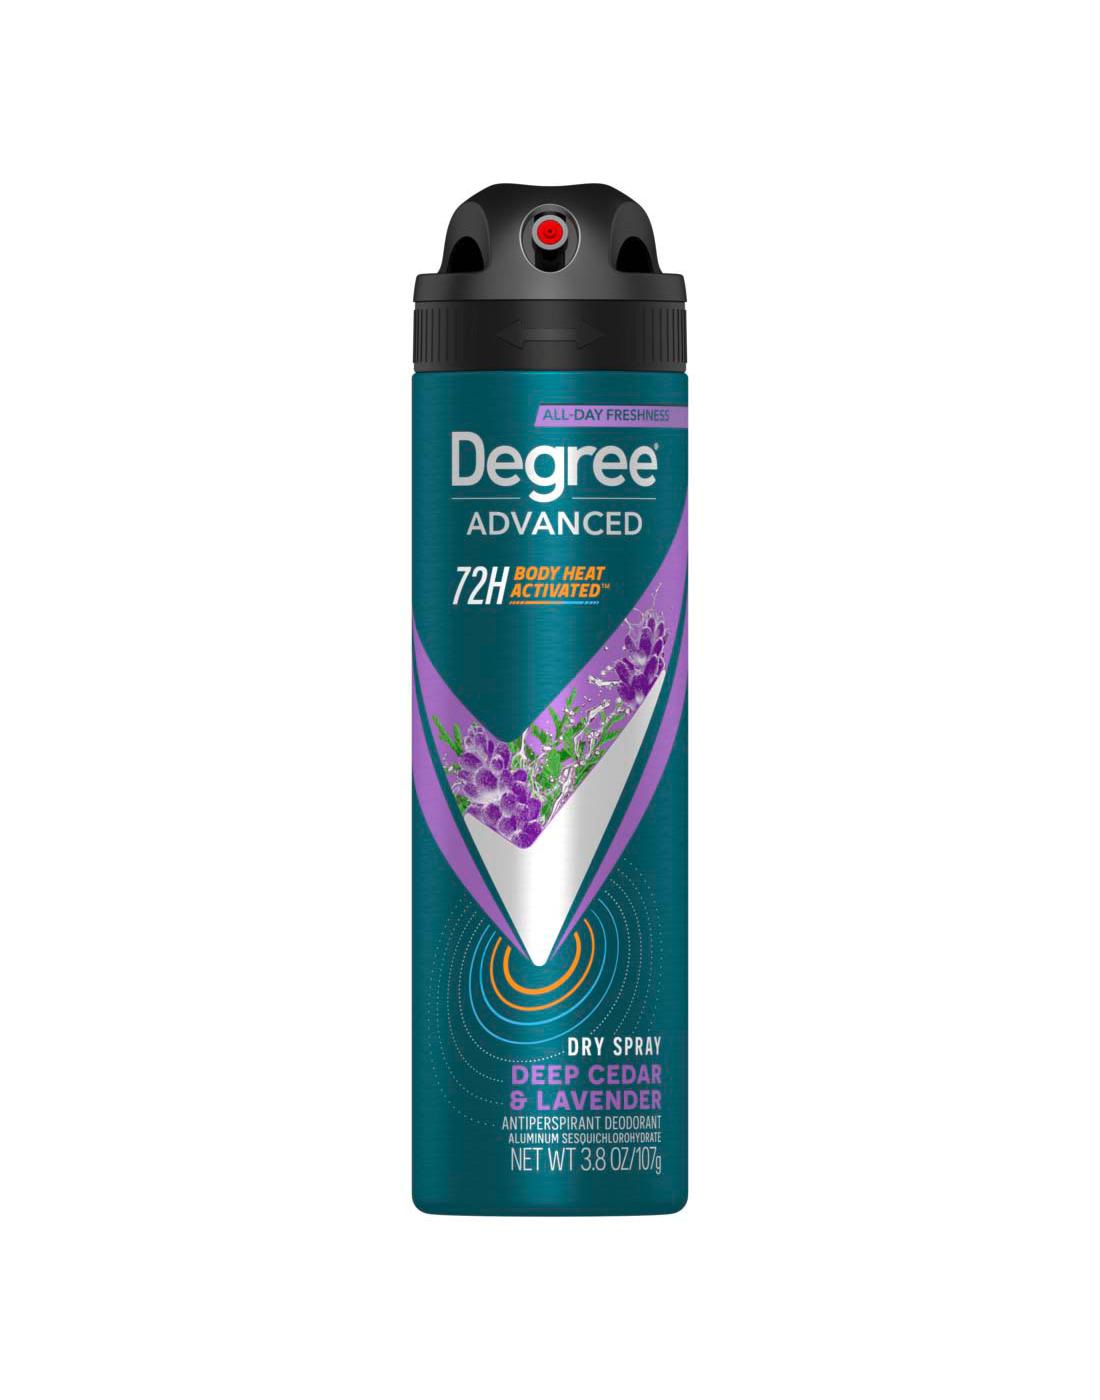 Degree Men Antiperspirant Deodorant Dry Spray - Deep Cedar & Lavender; image 1 of 2